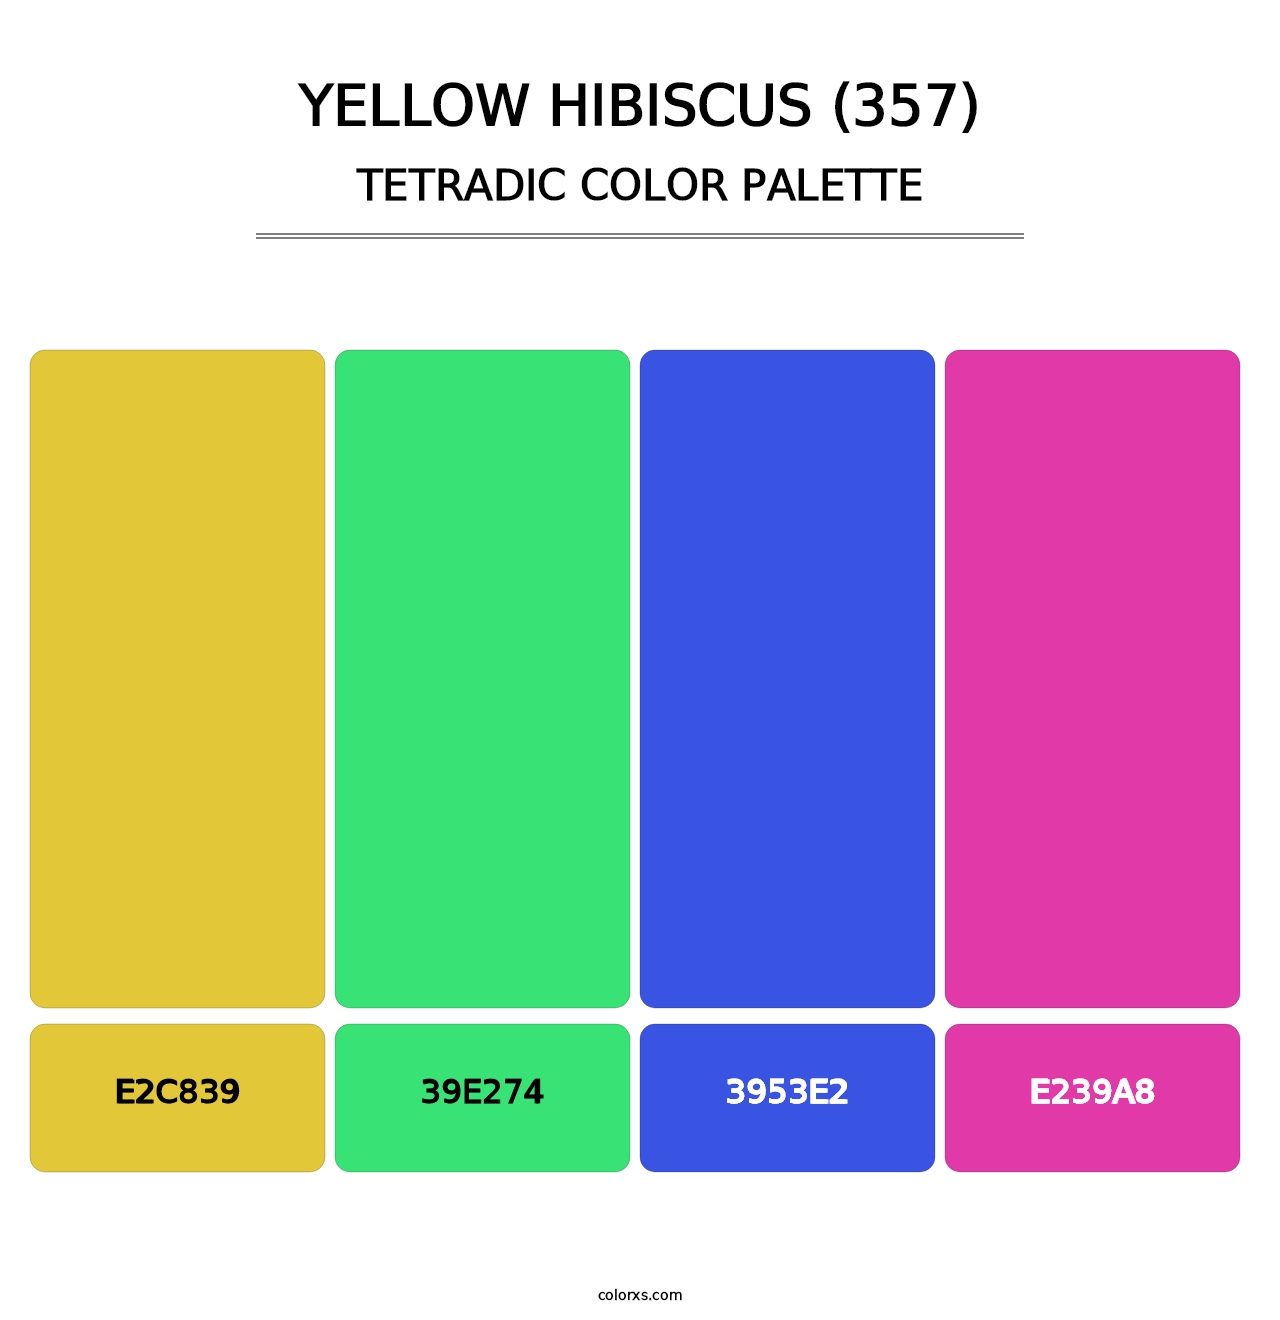 Yellow Hibiscus (357) - Tetradic Color Palette